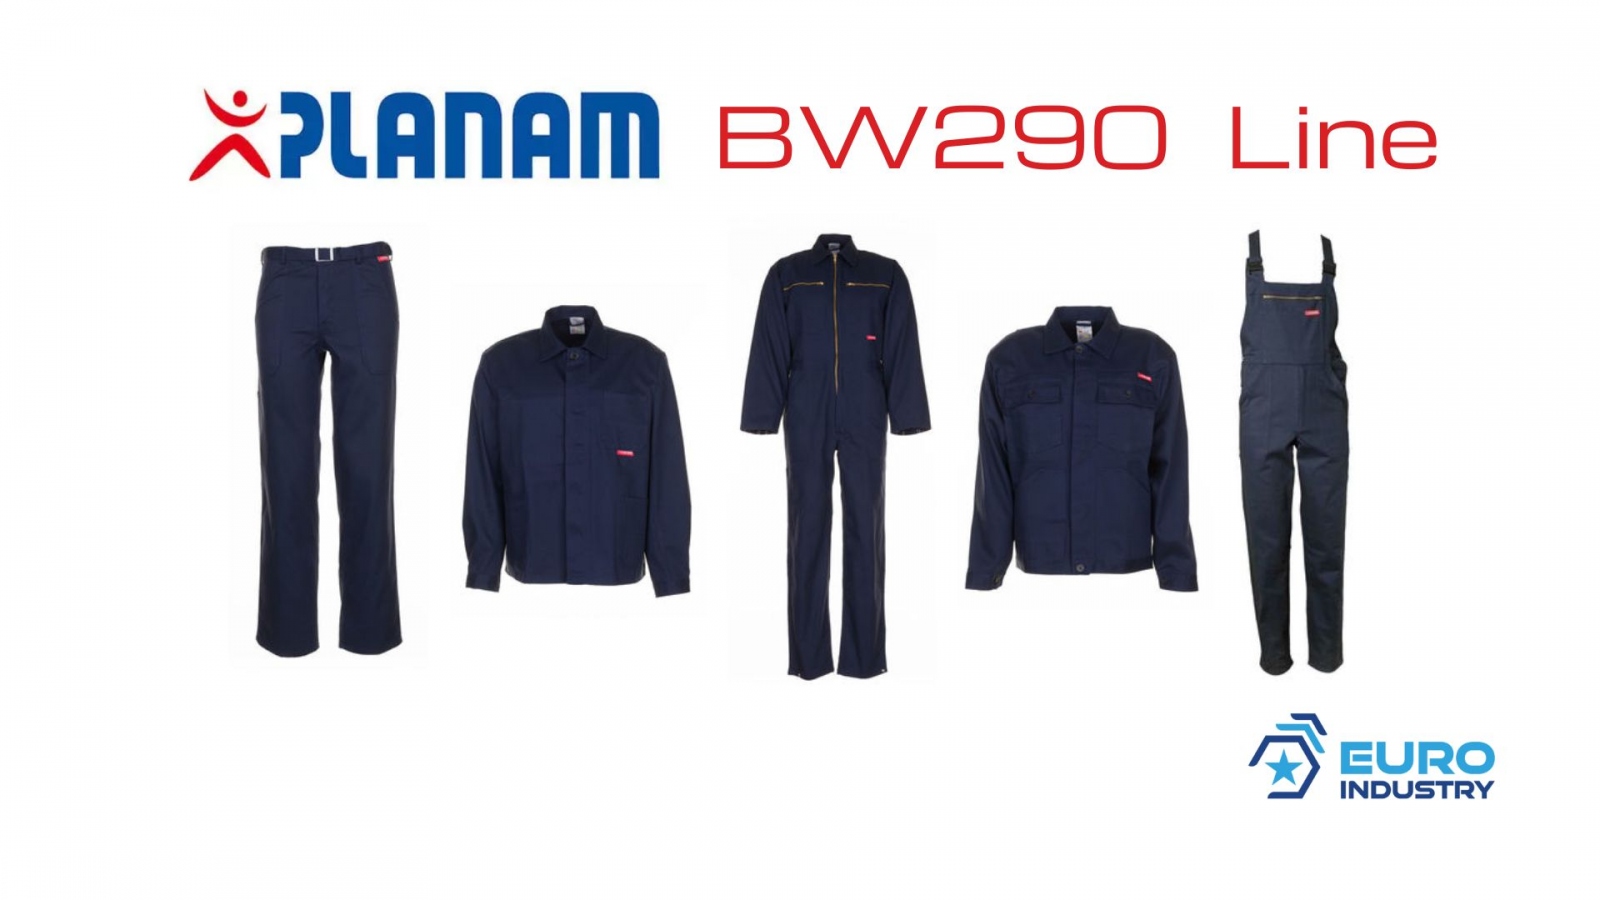 pics/Planam/planam-bw-290-linie-hydronblau-baumwolle-details.jpg